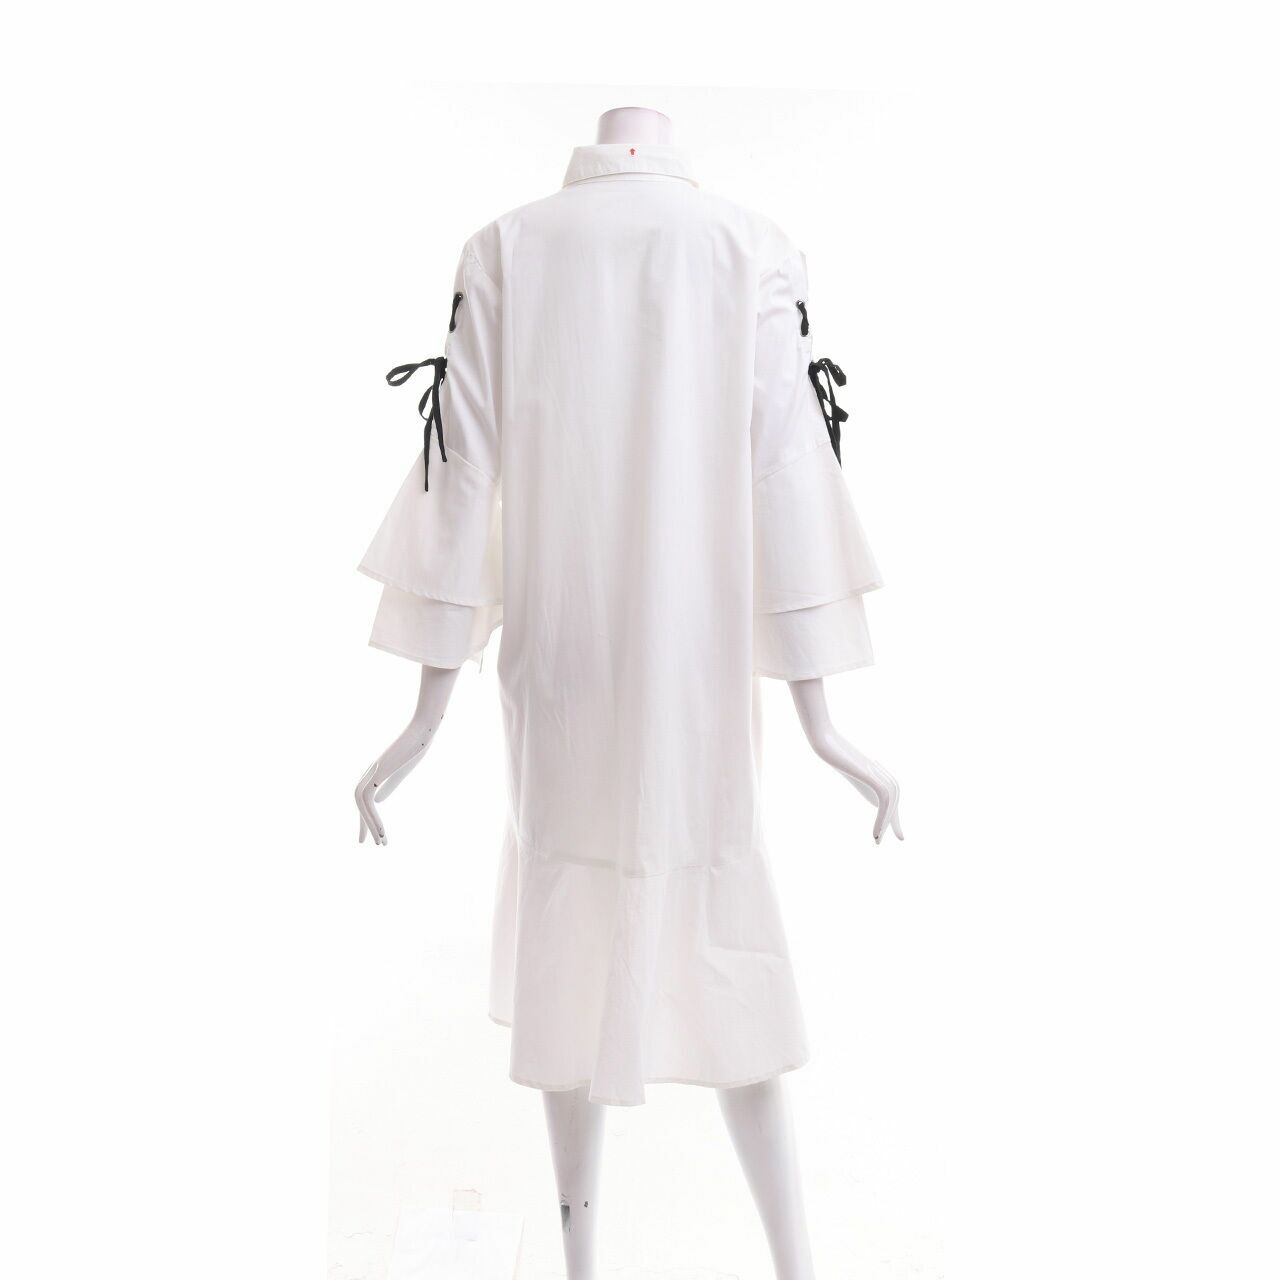 Schoncouture White Tunic Shirt	